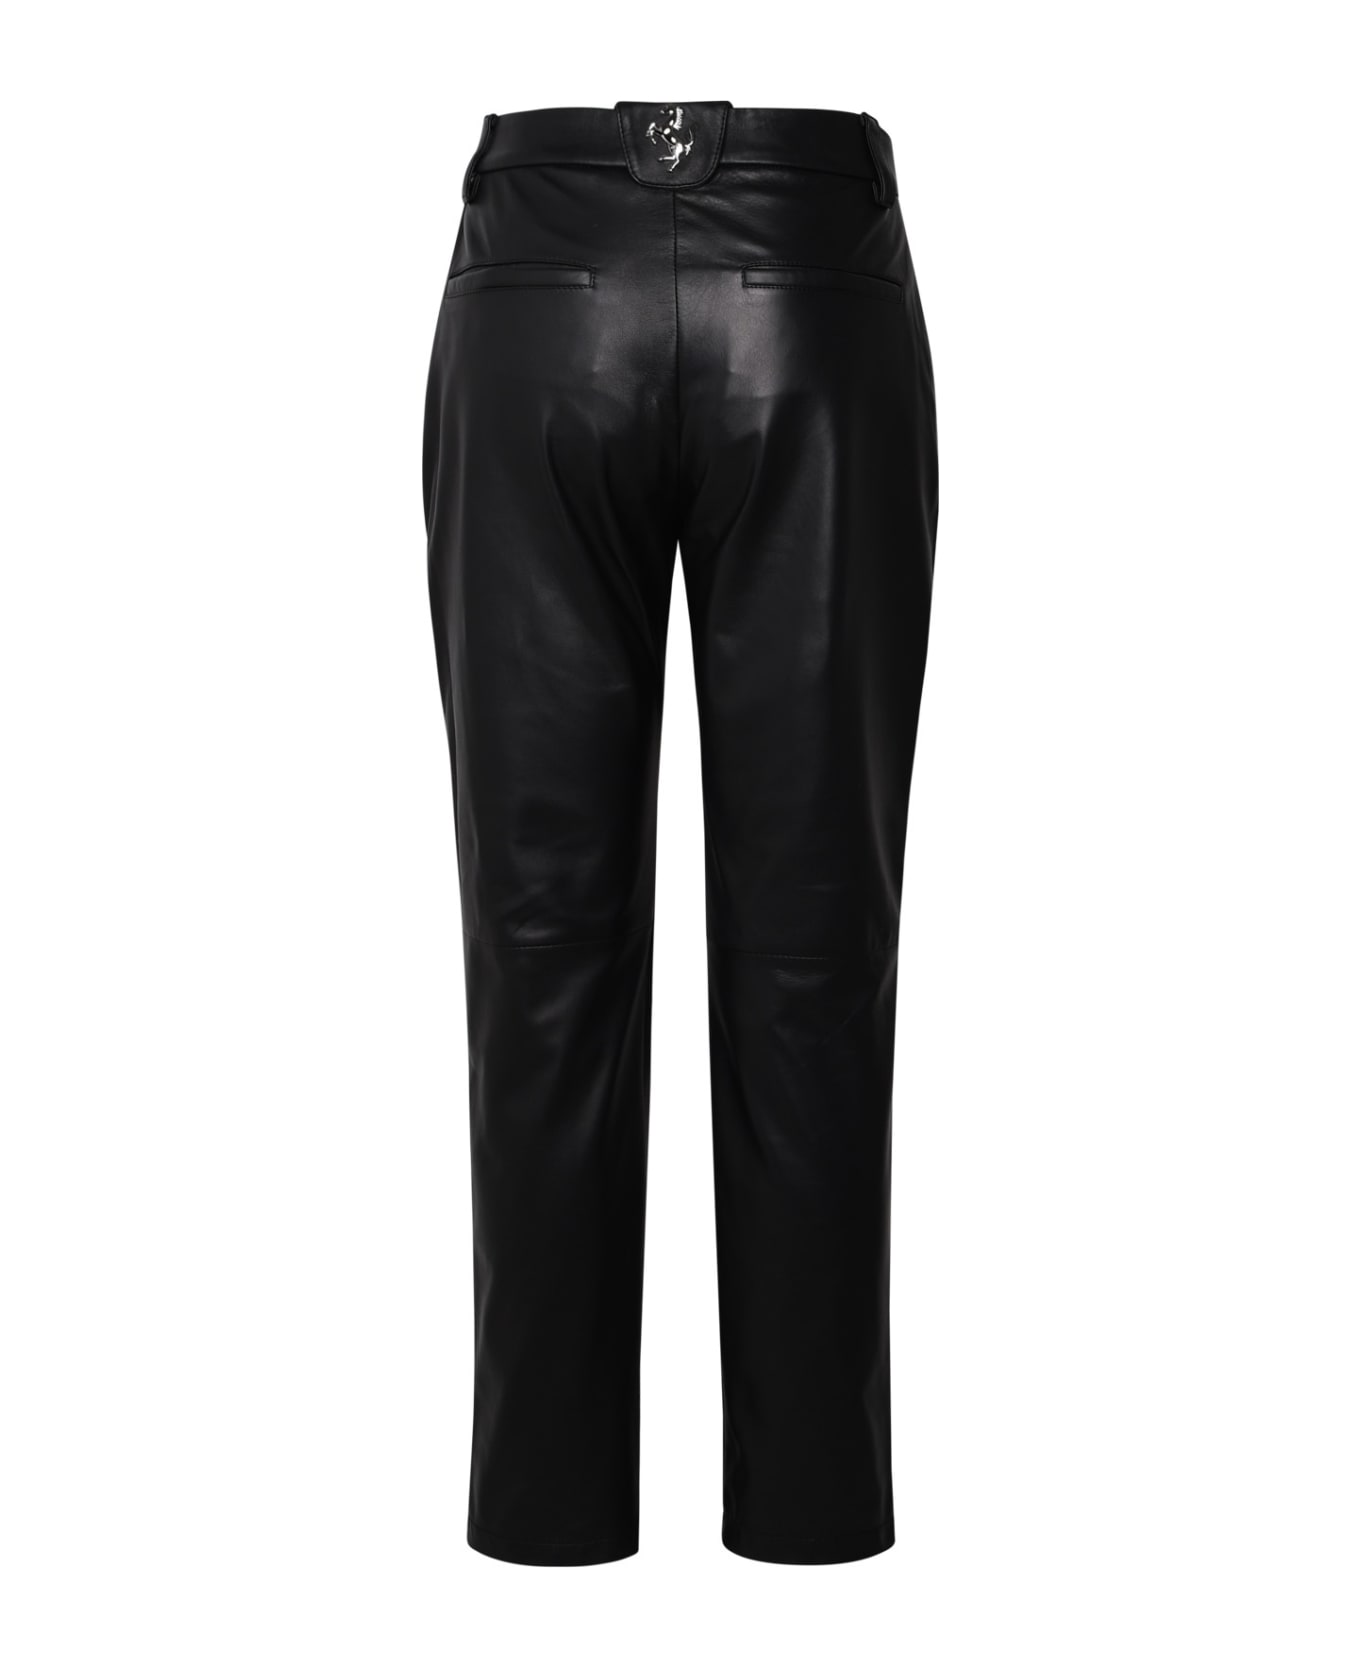 Ferrari Black Leather Pants - Black ボトムス